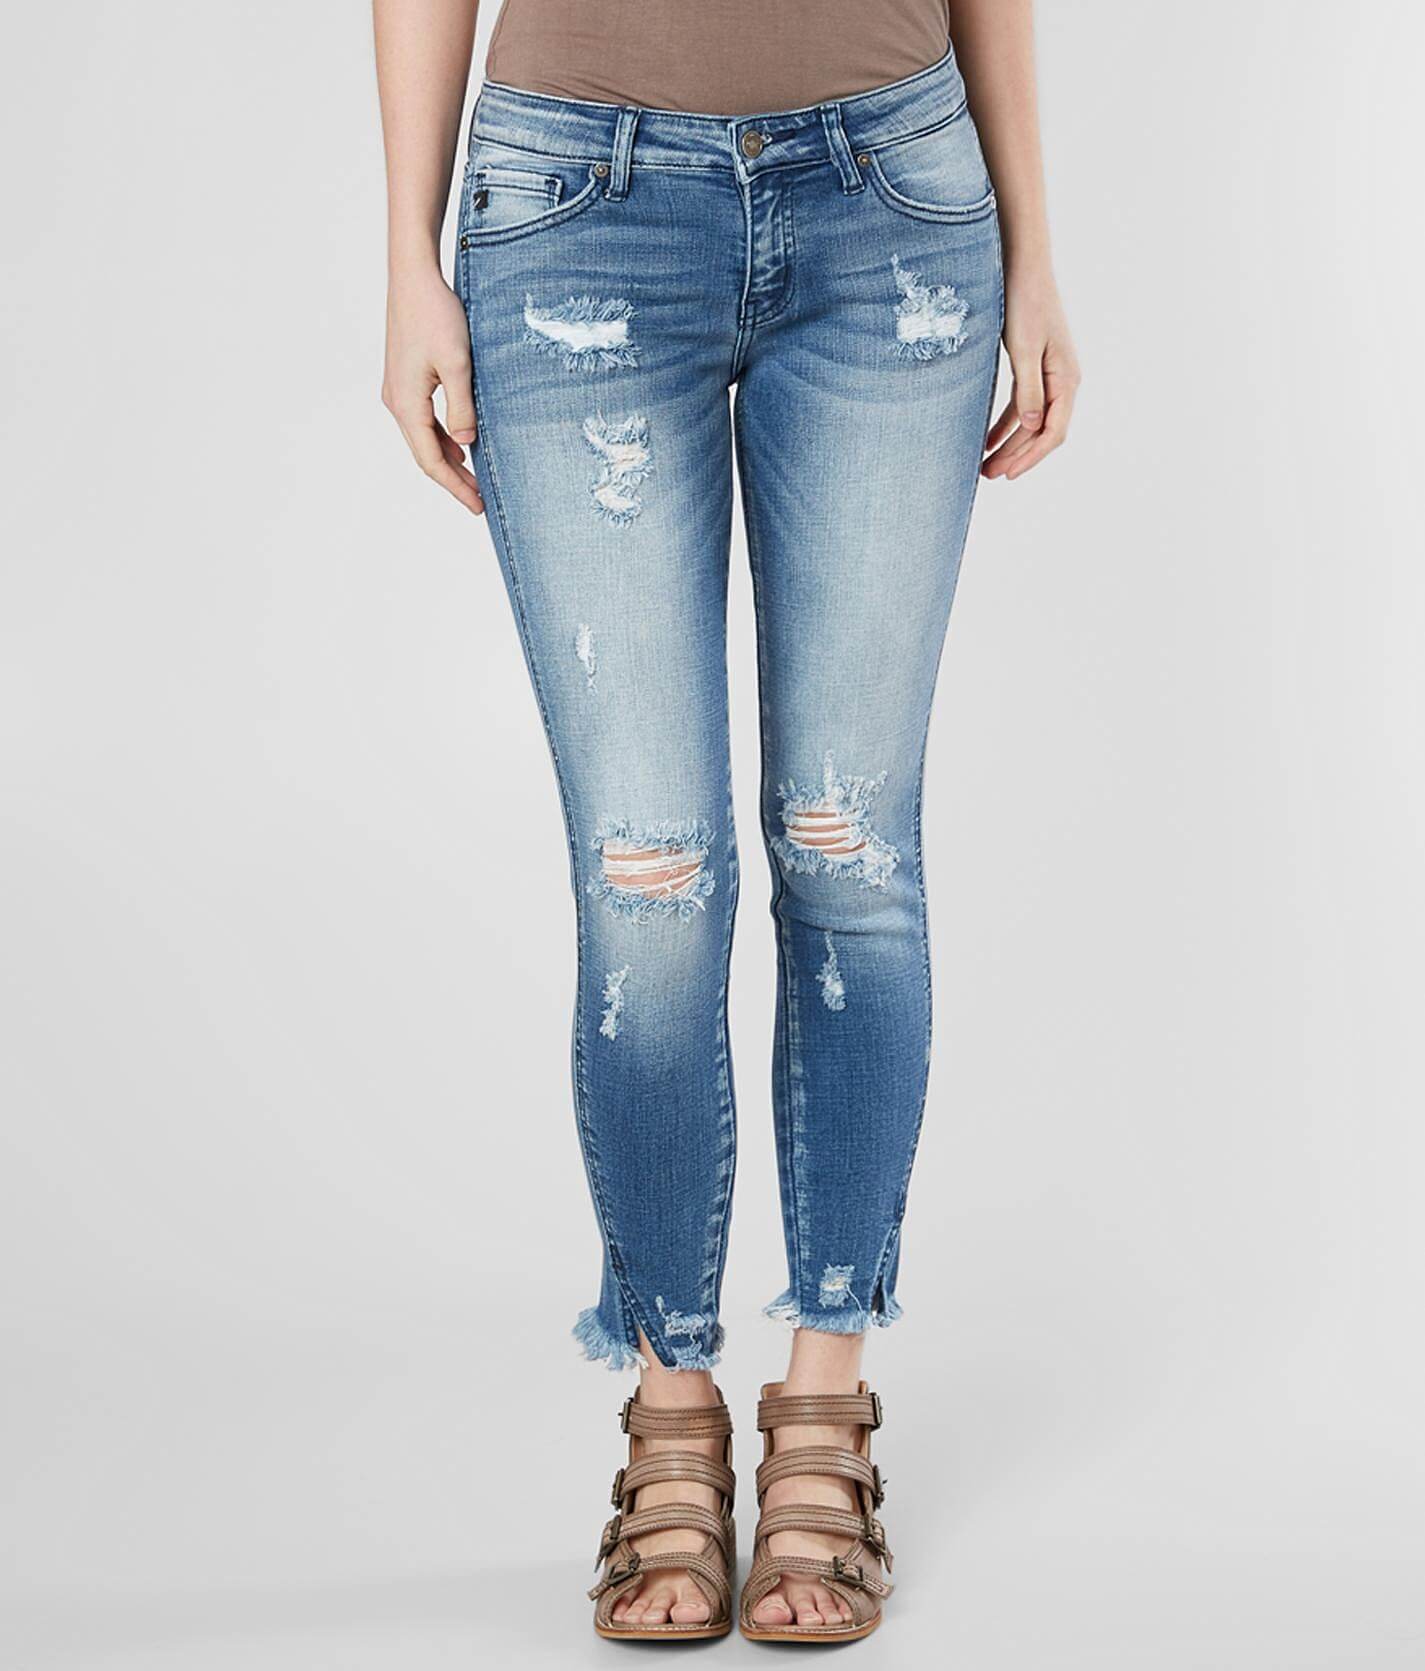 kancan frayed jeans